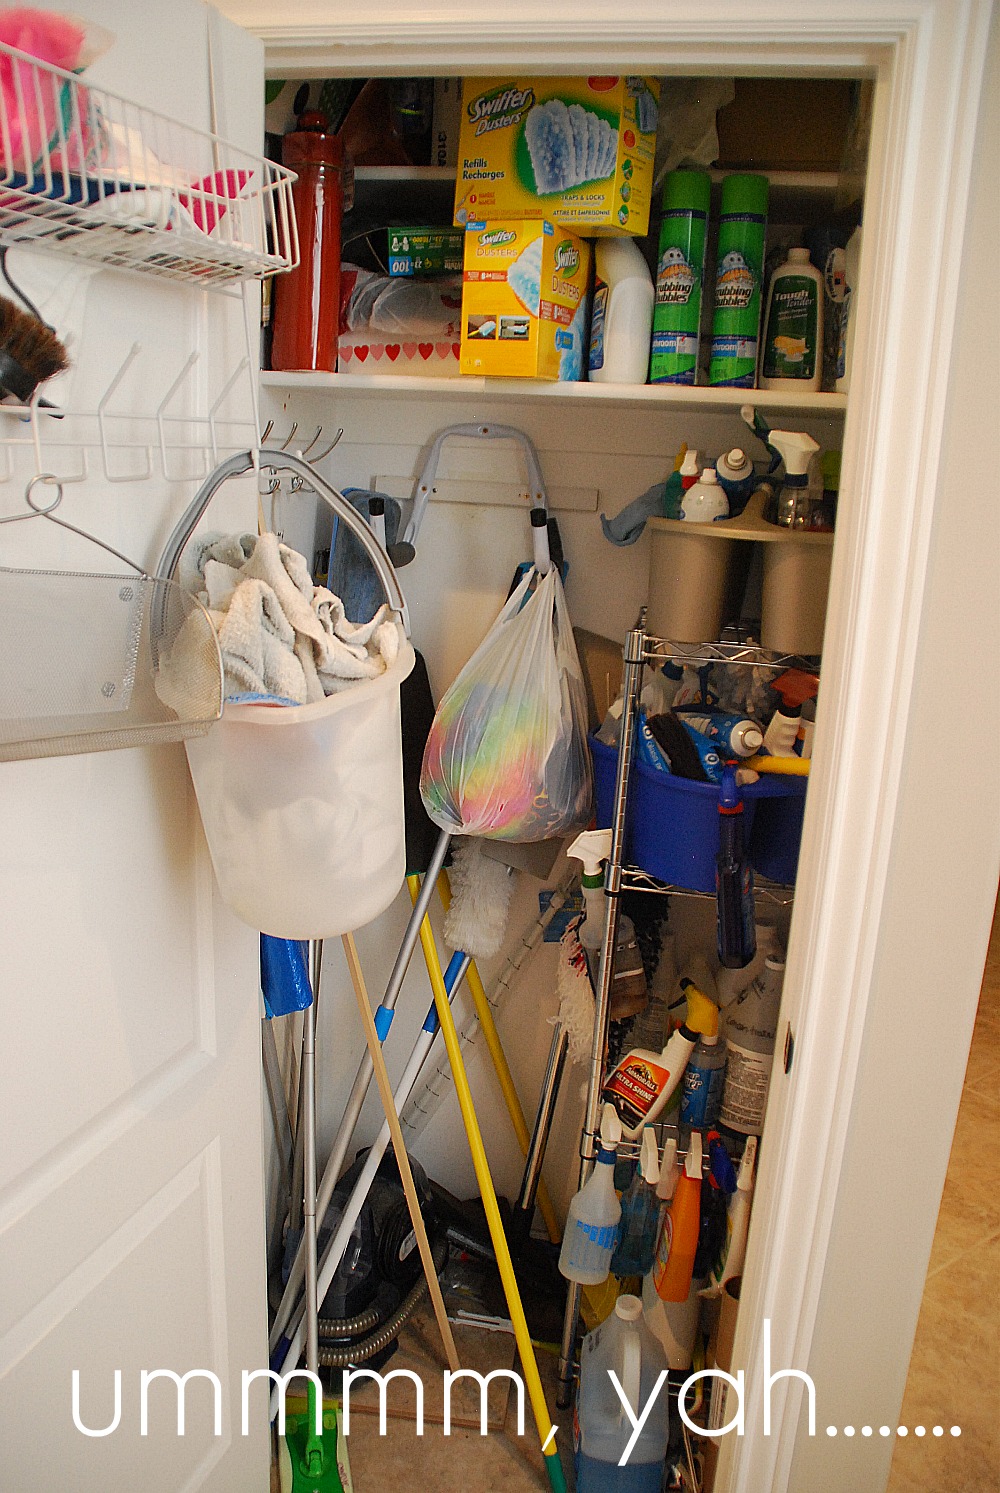 https://tatertotsandjello.com/wp-content/uploads/2012/01/before-cleaning-closet.jpg